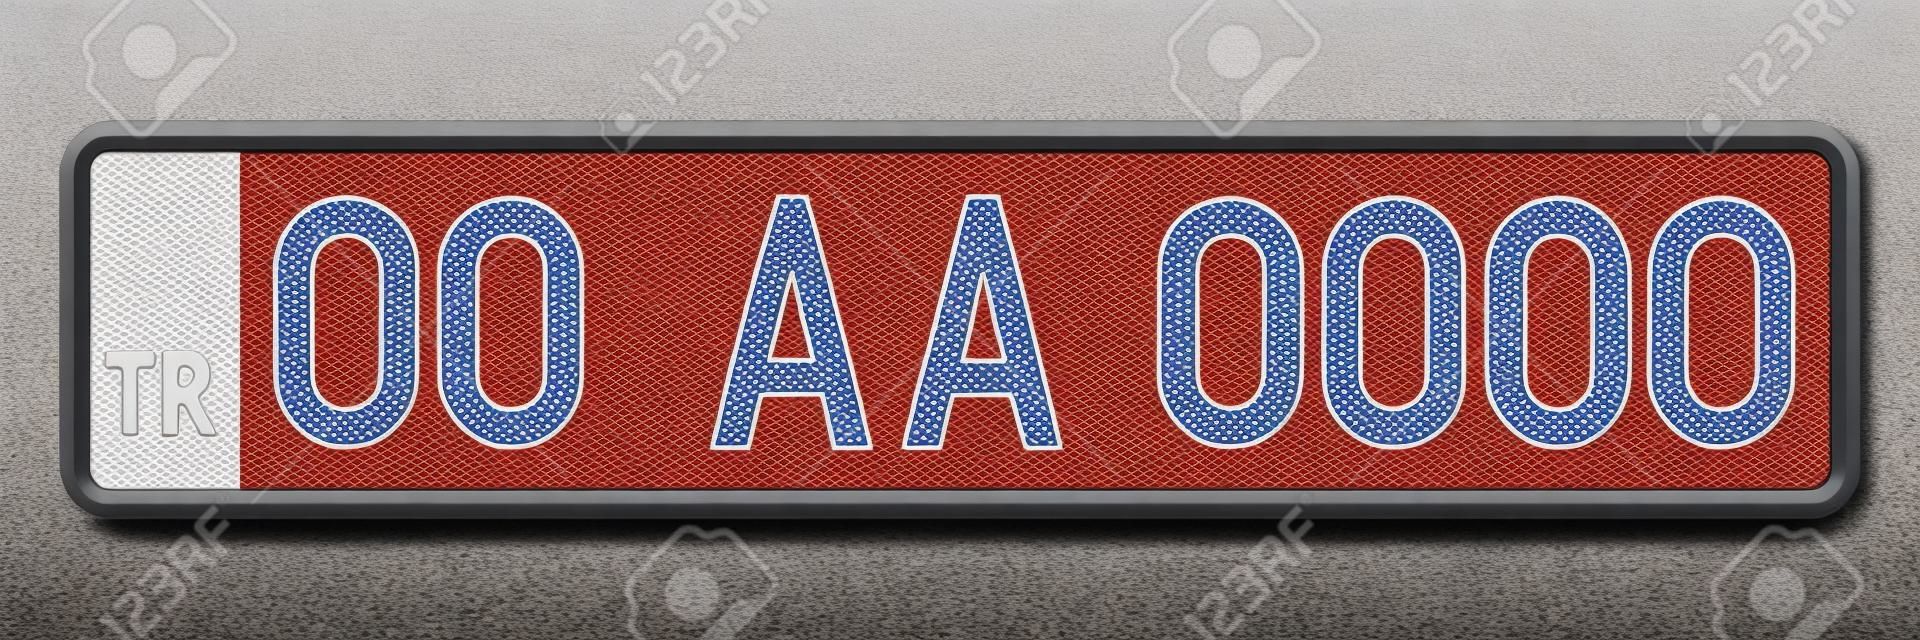 Number plate. Vehicle registration plates of Turkey